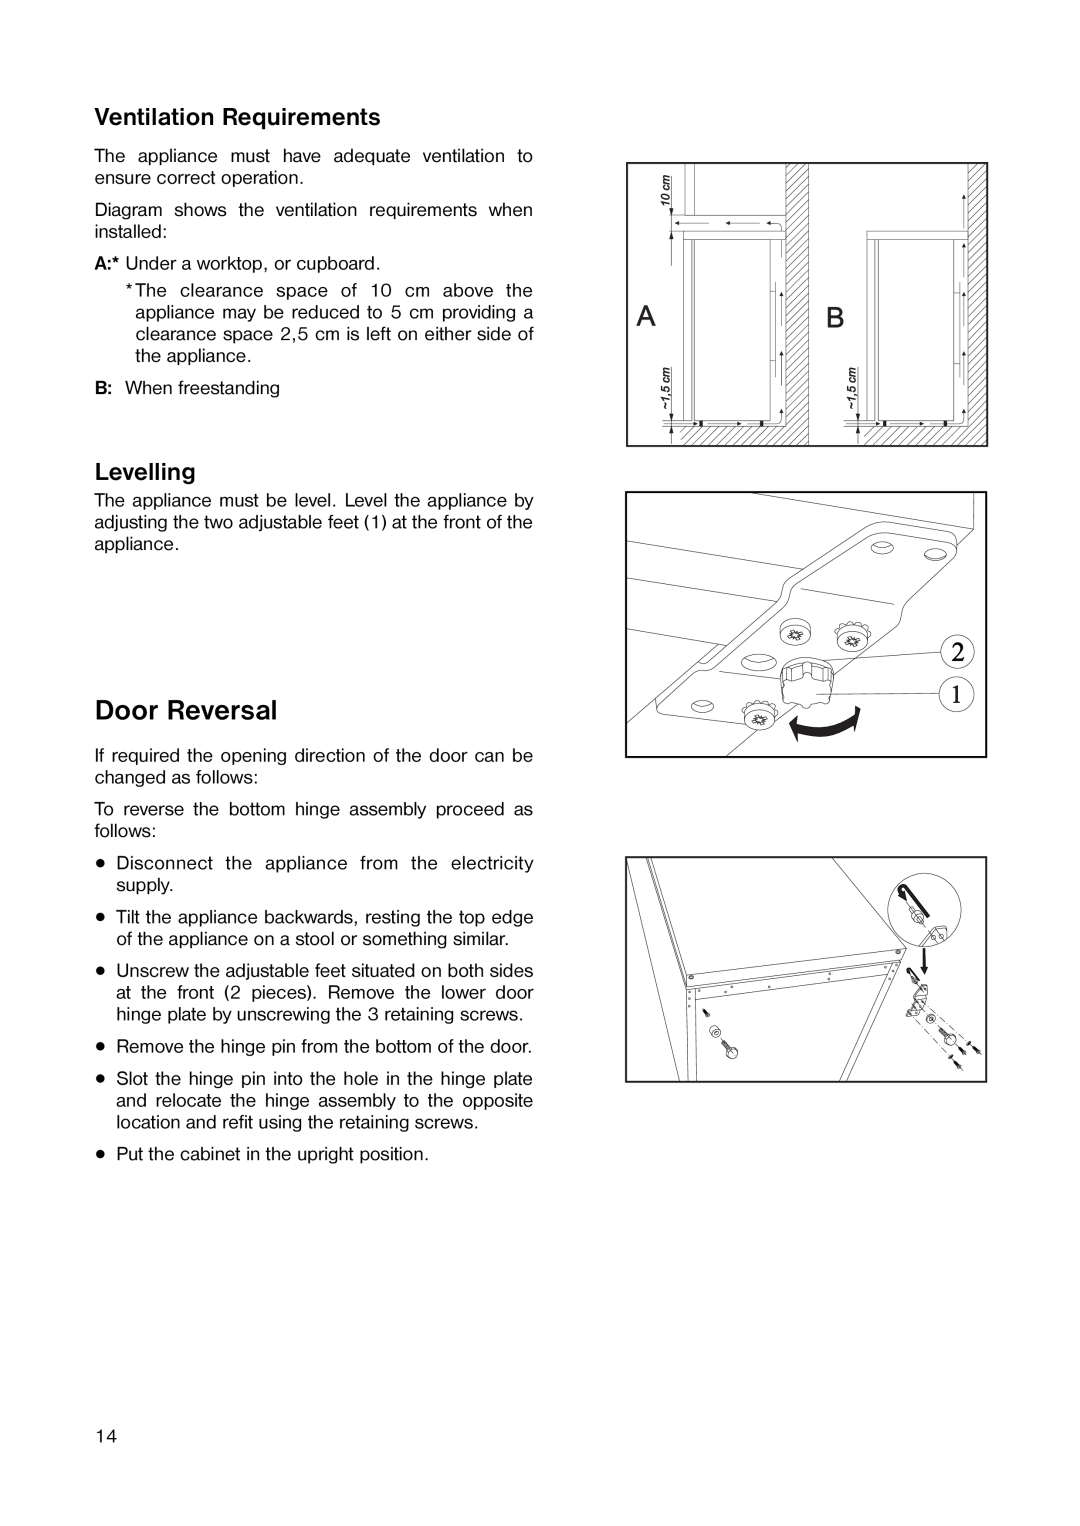 Tricity Bendix TB 55 R installation instructions Door Reversal, Ventilation Requirements, Levelling 